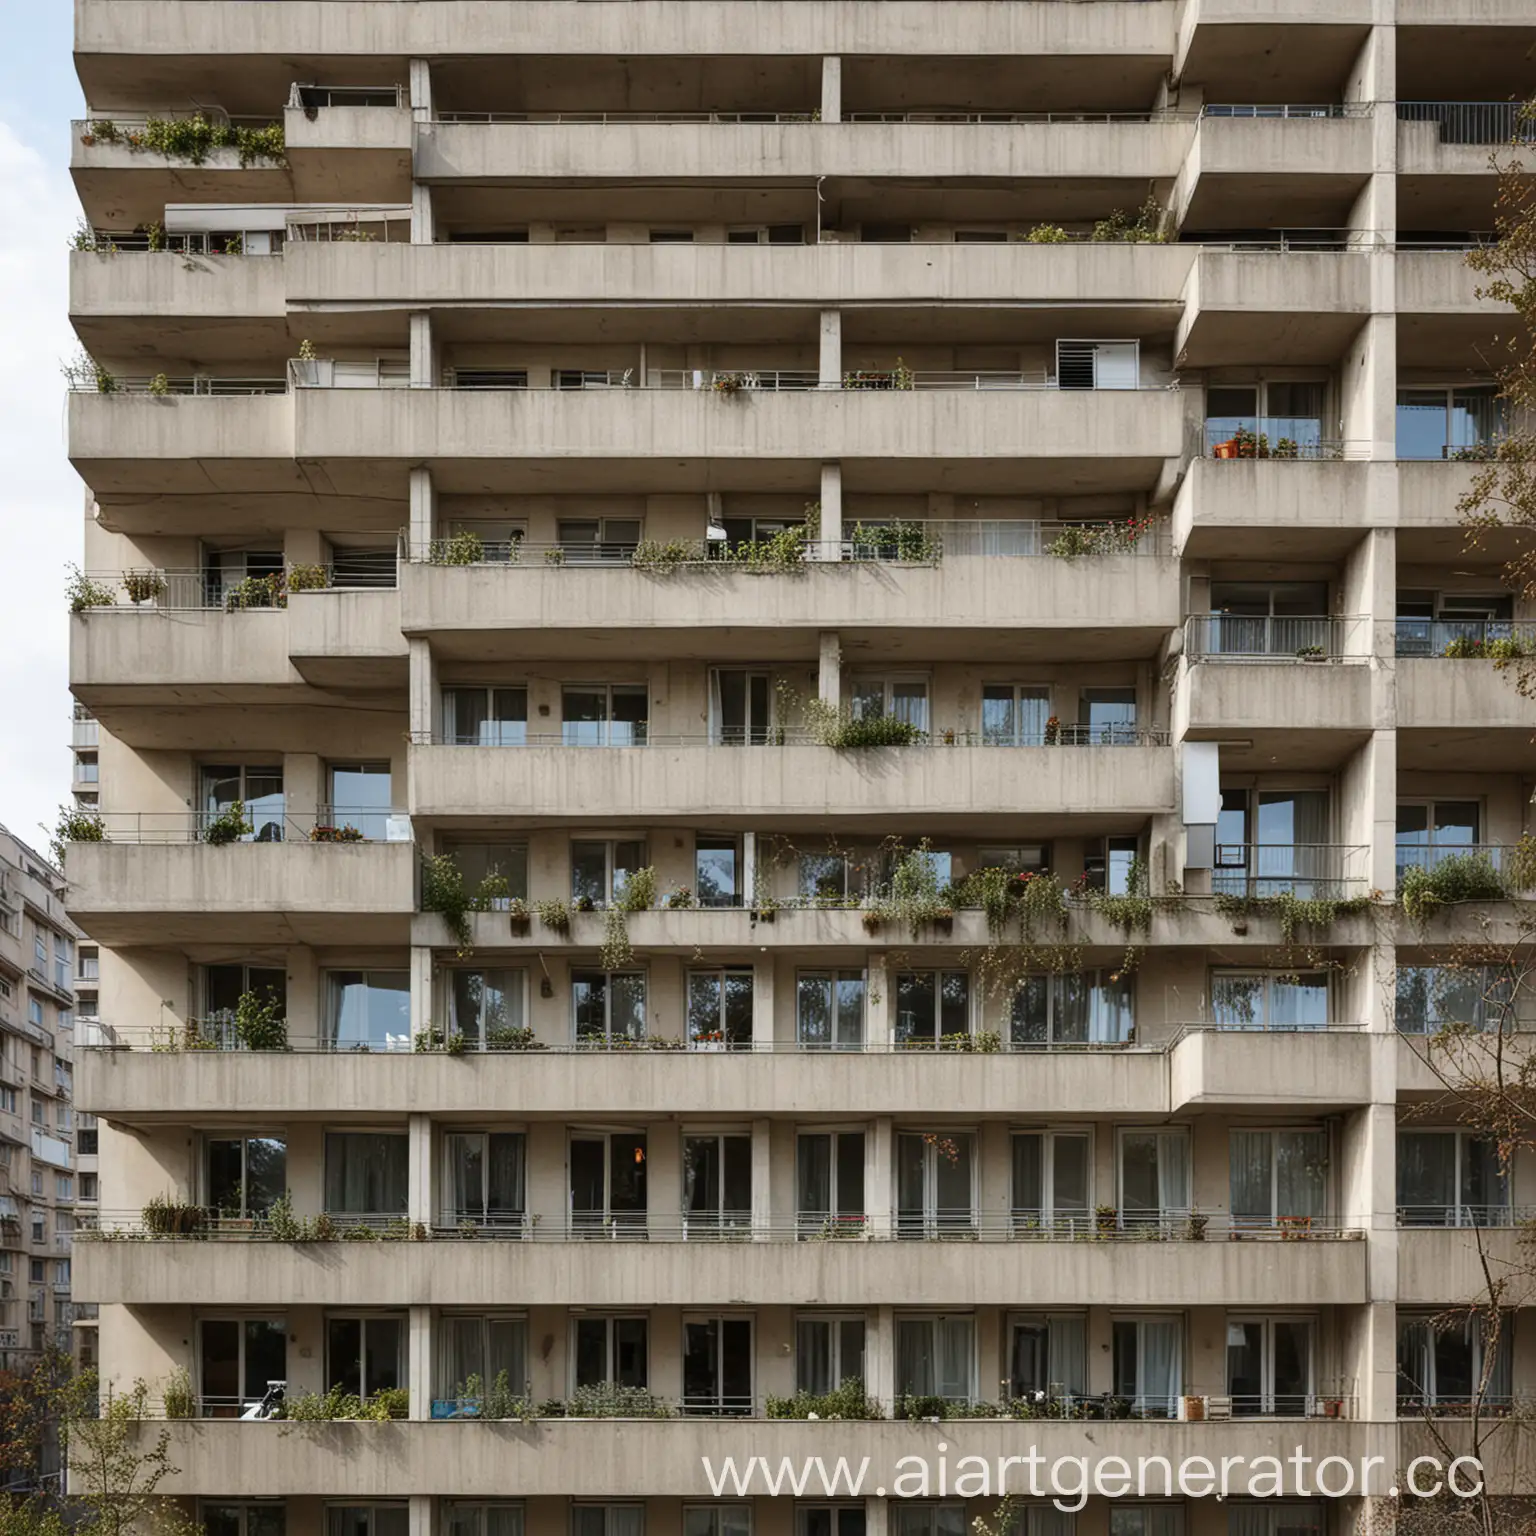 Urban-Landscape-MultiStorey-Apartment-Building-Facade